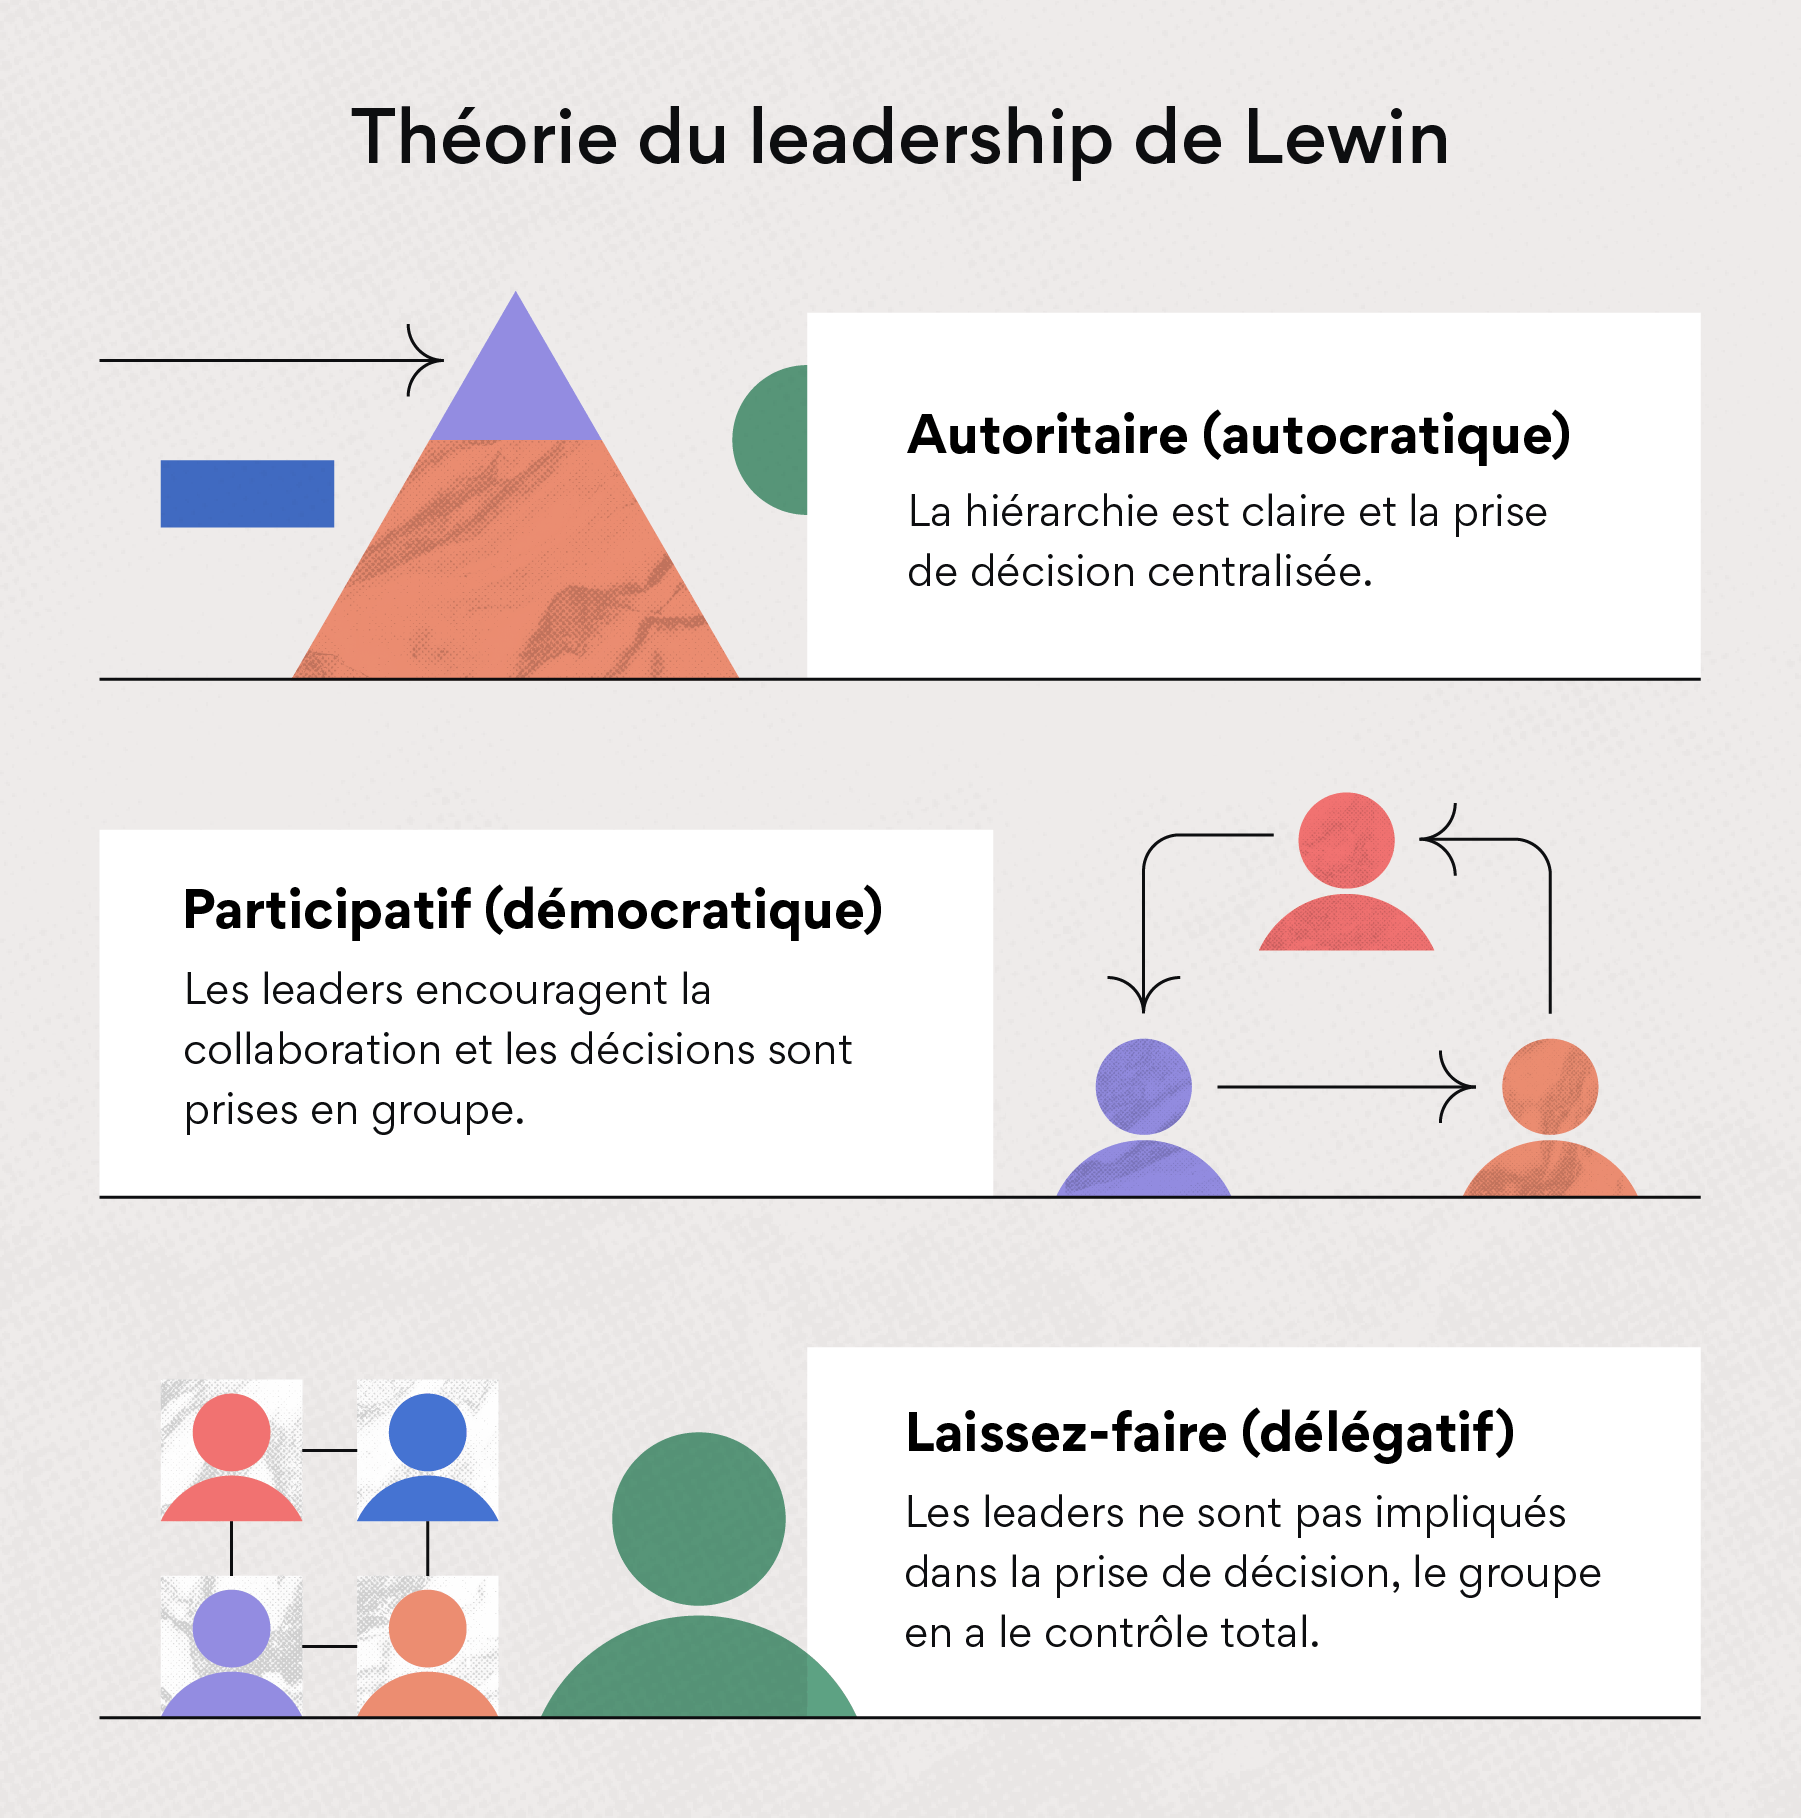 La théorie du leadership de Lewin